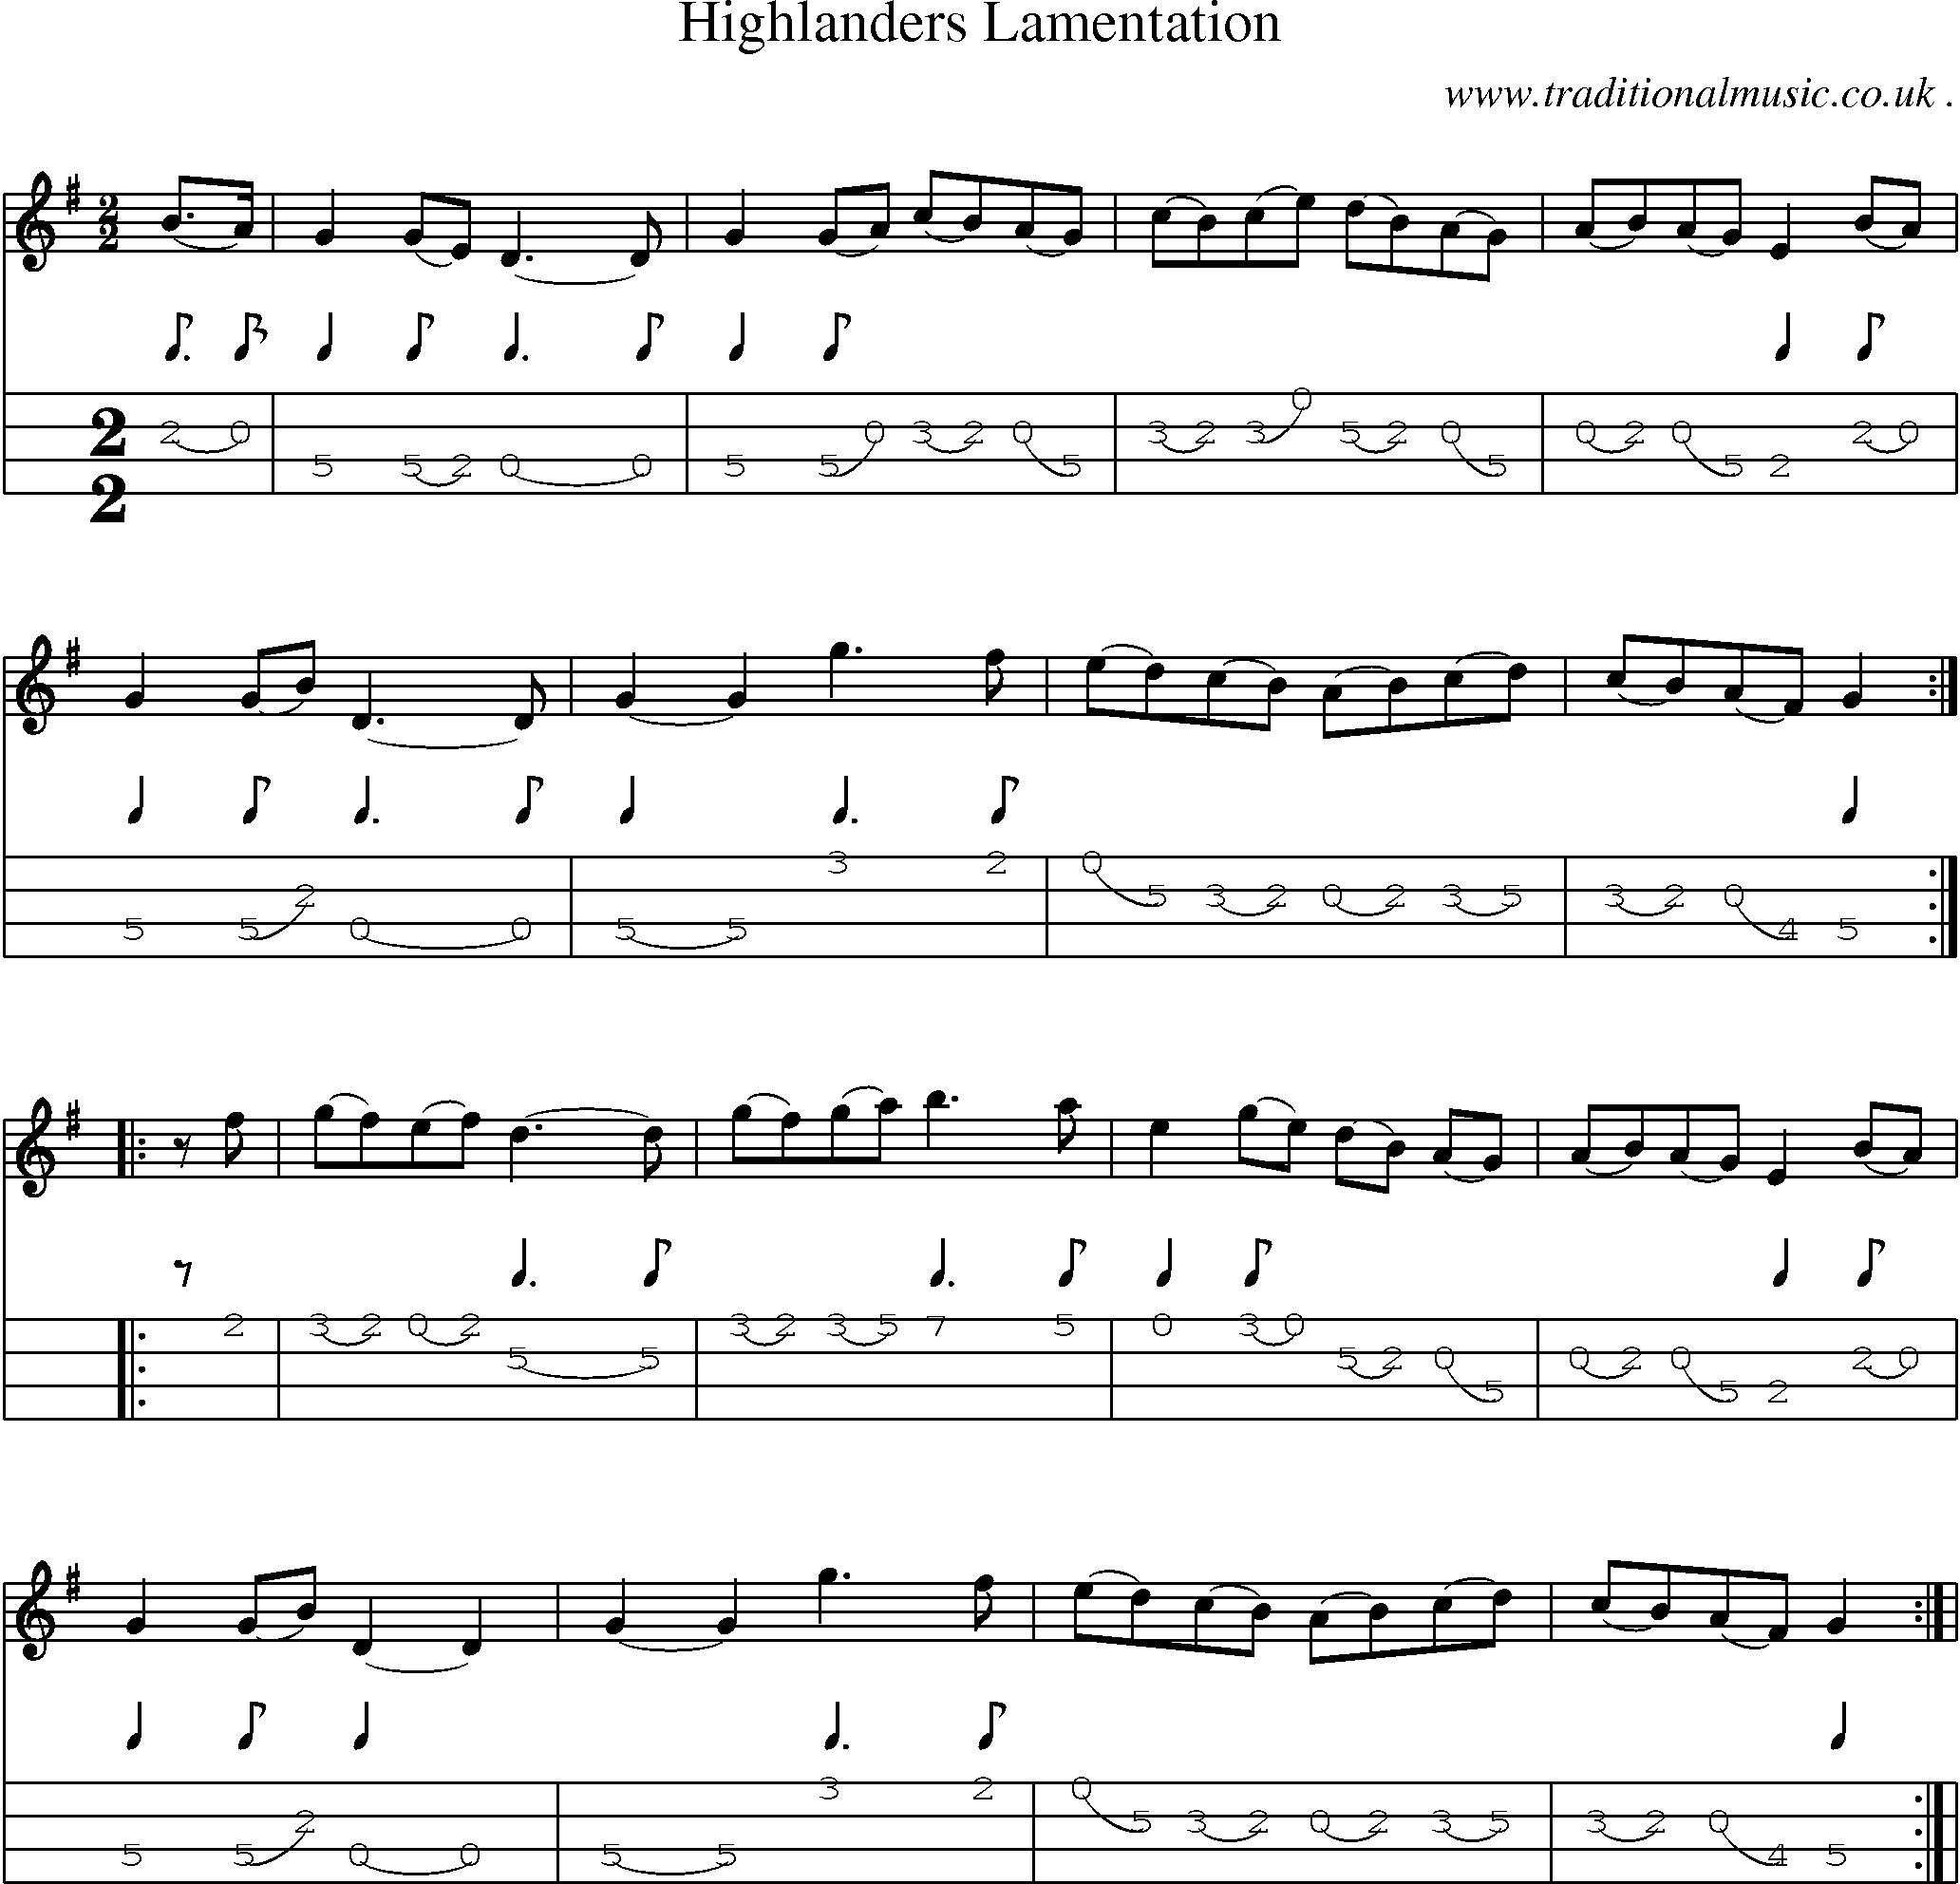 Sheet-Music and Mandolin Tabs for Highlanders Lamentation